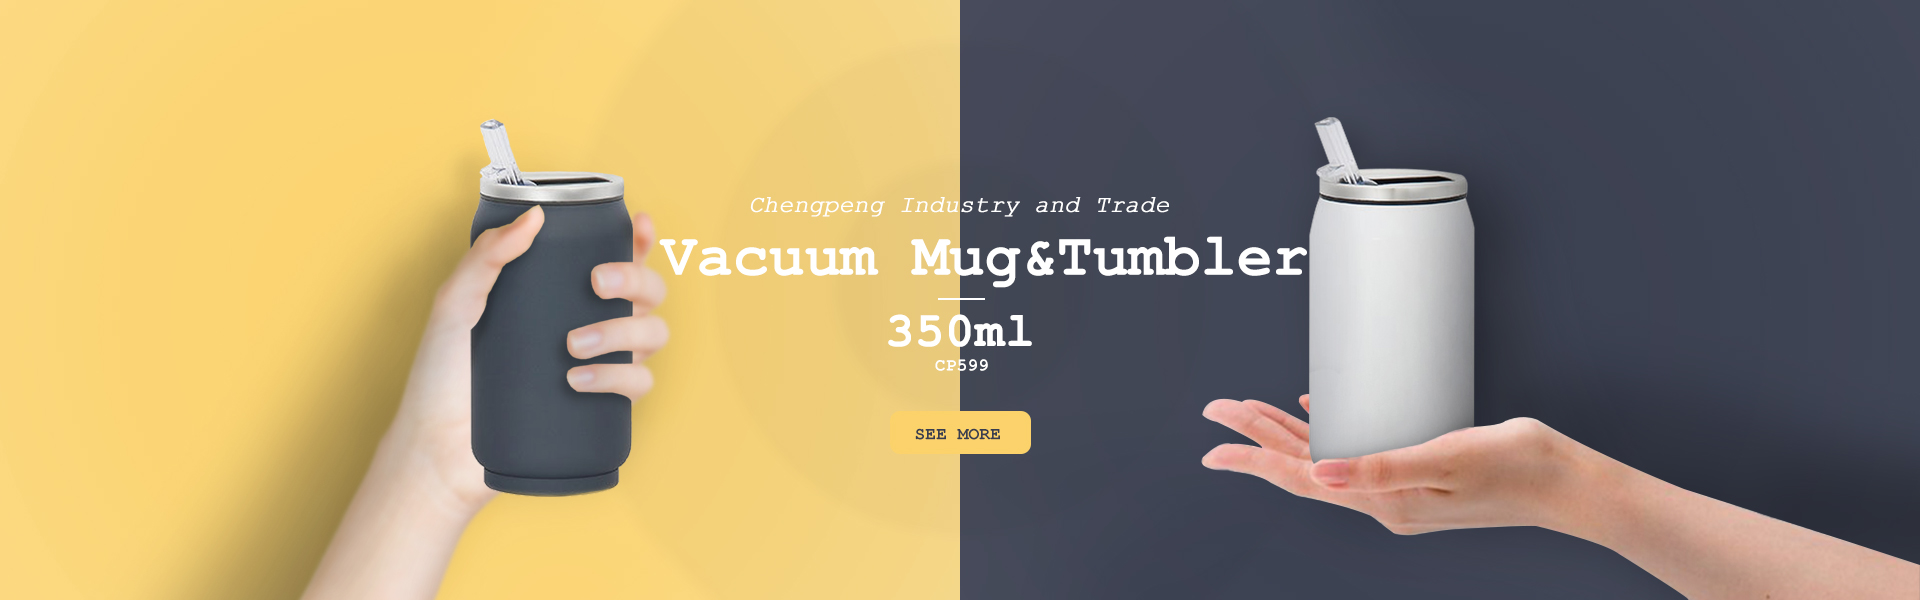 Vacuum Mug/Tumbler